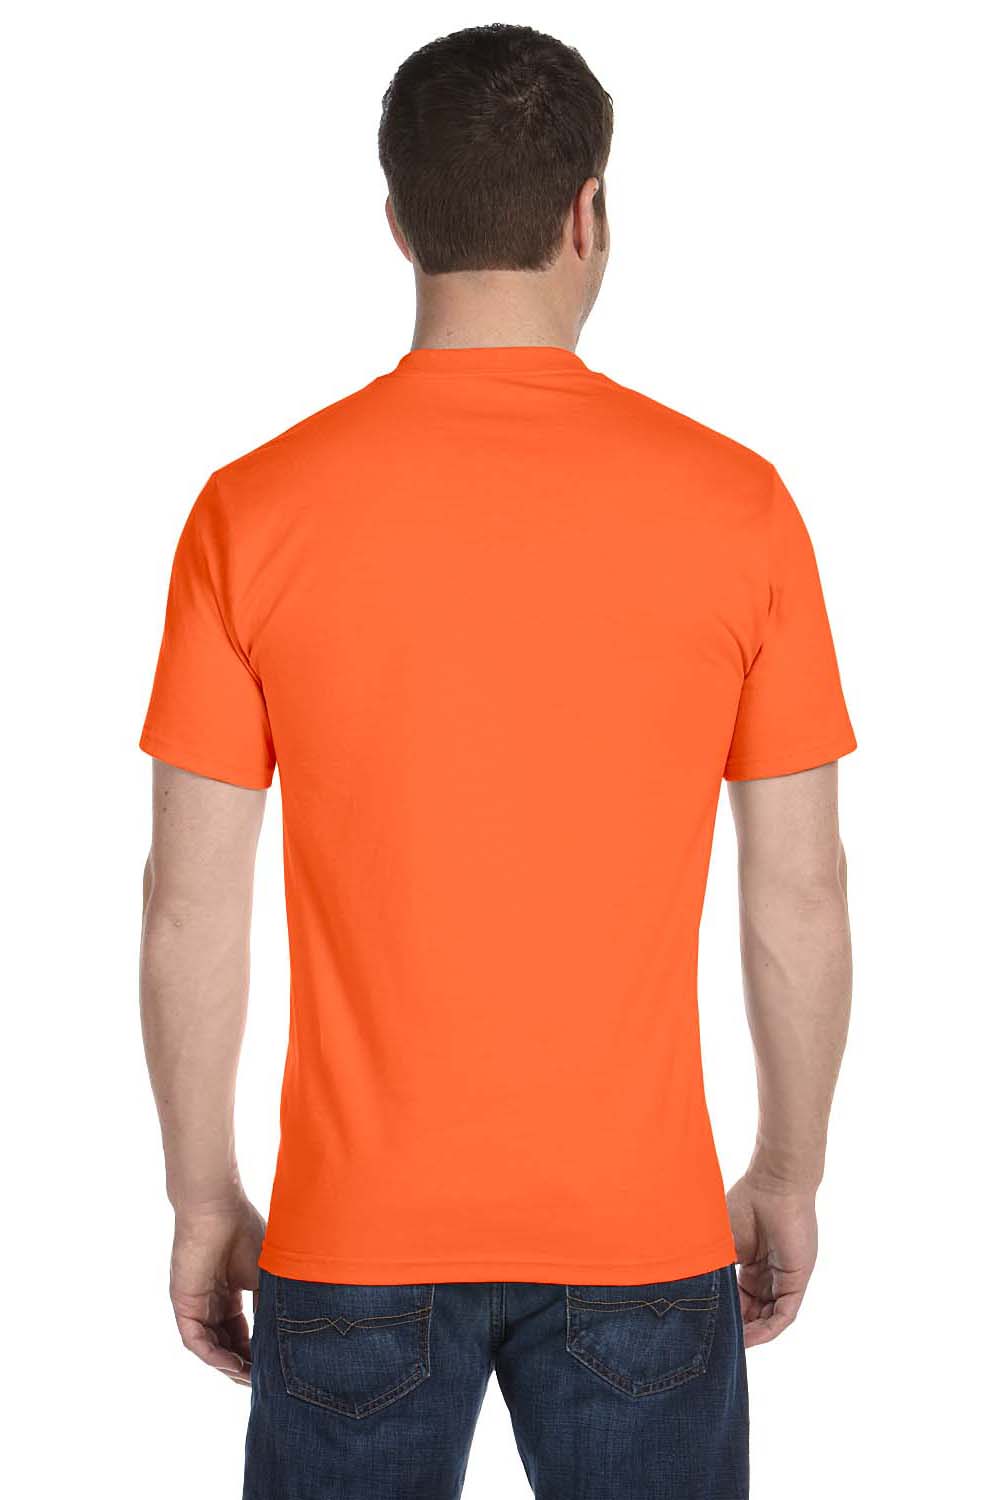 Gildan G800 Mens DryBlend Moisture Wicking Short Sleeve Crewneck T-Shirt Orange Back